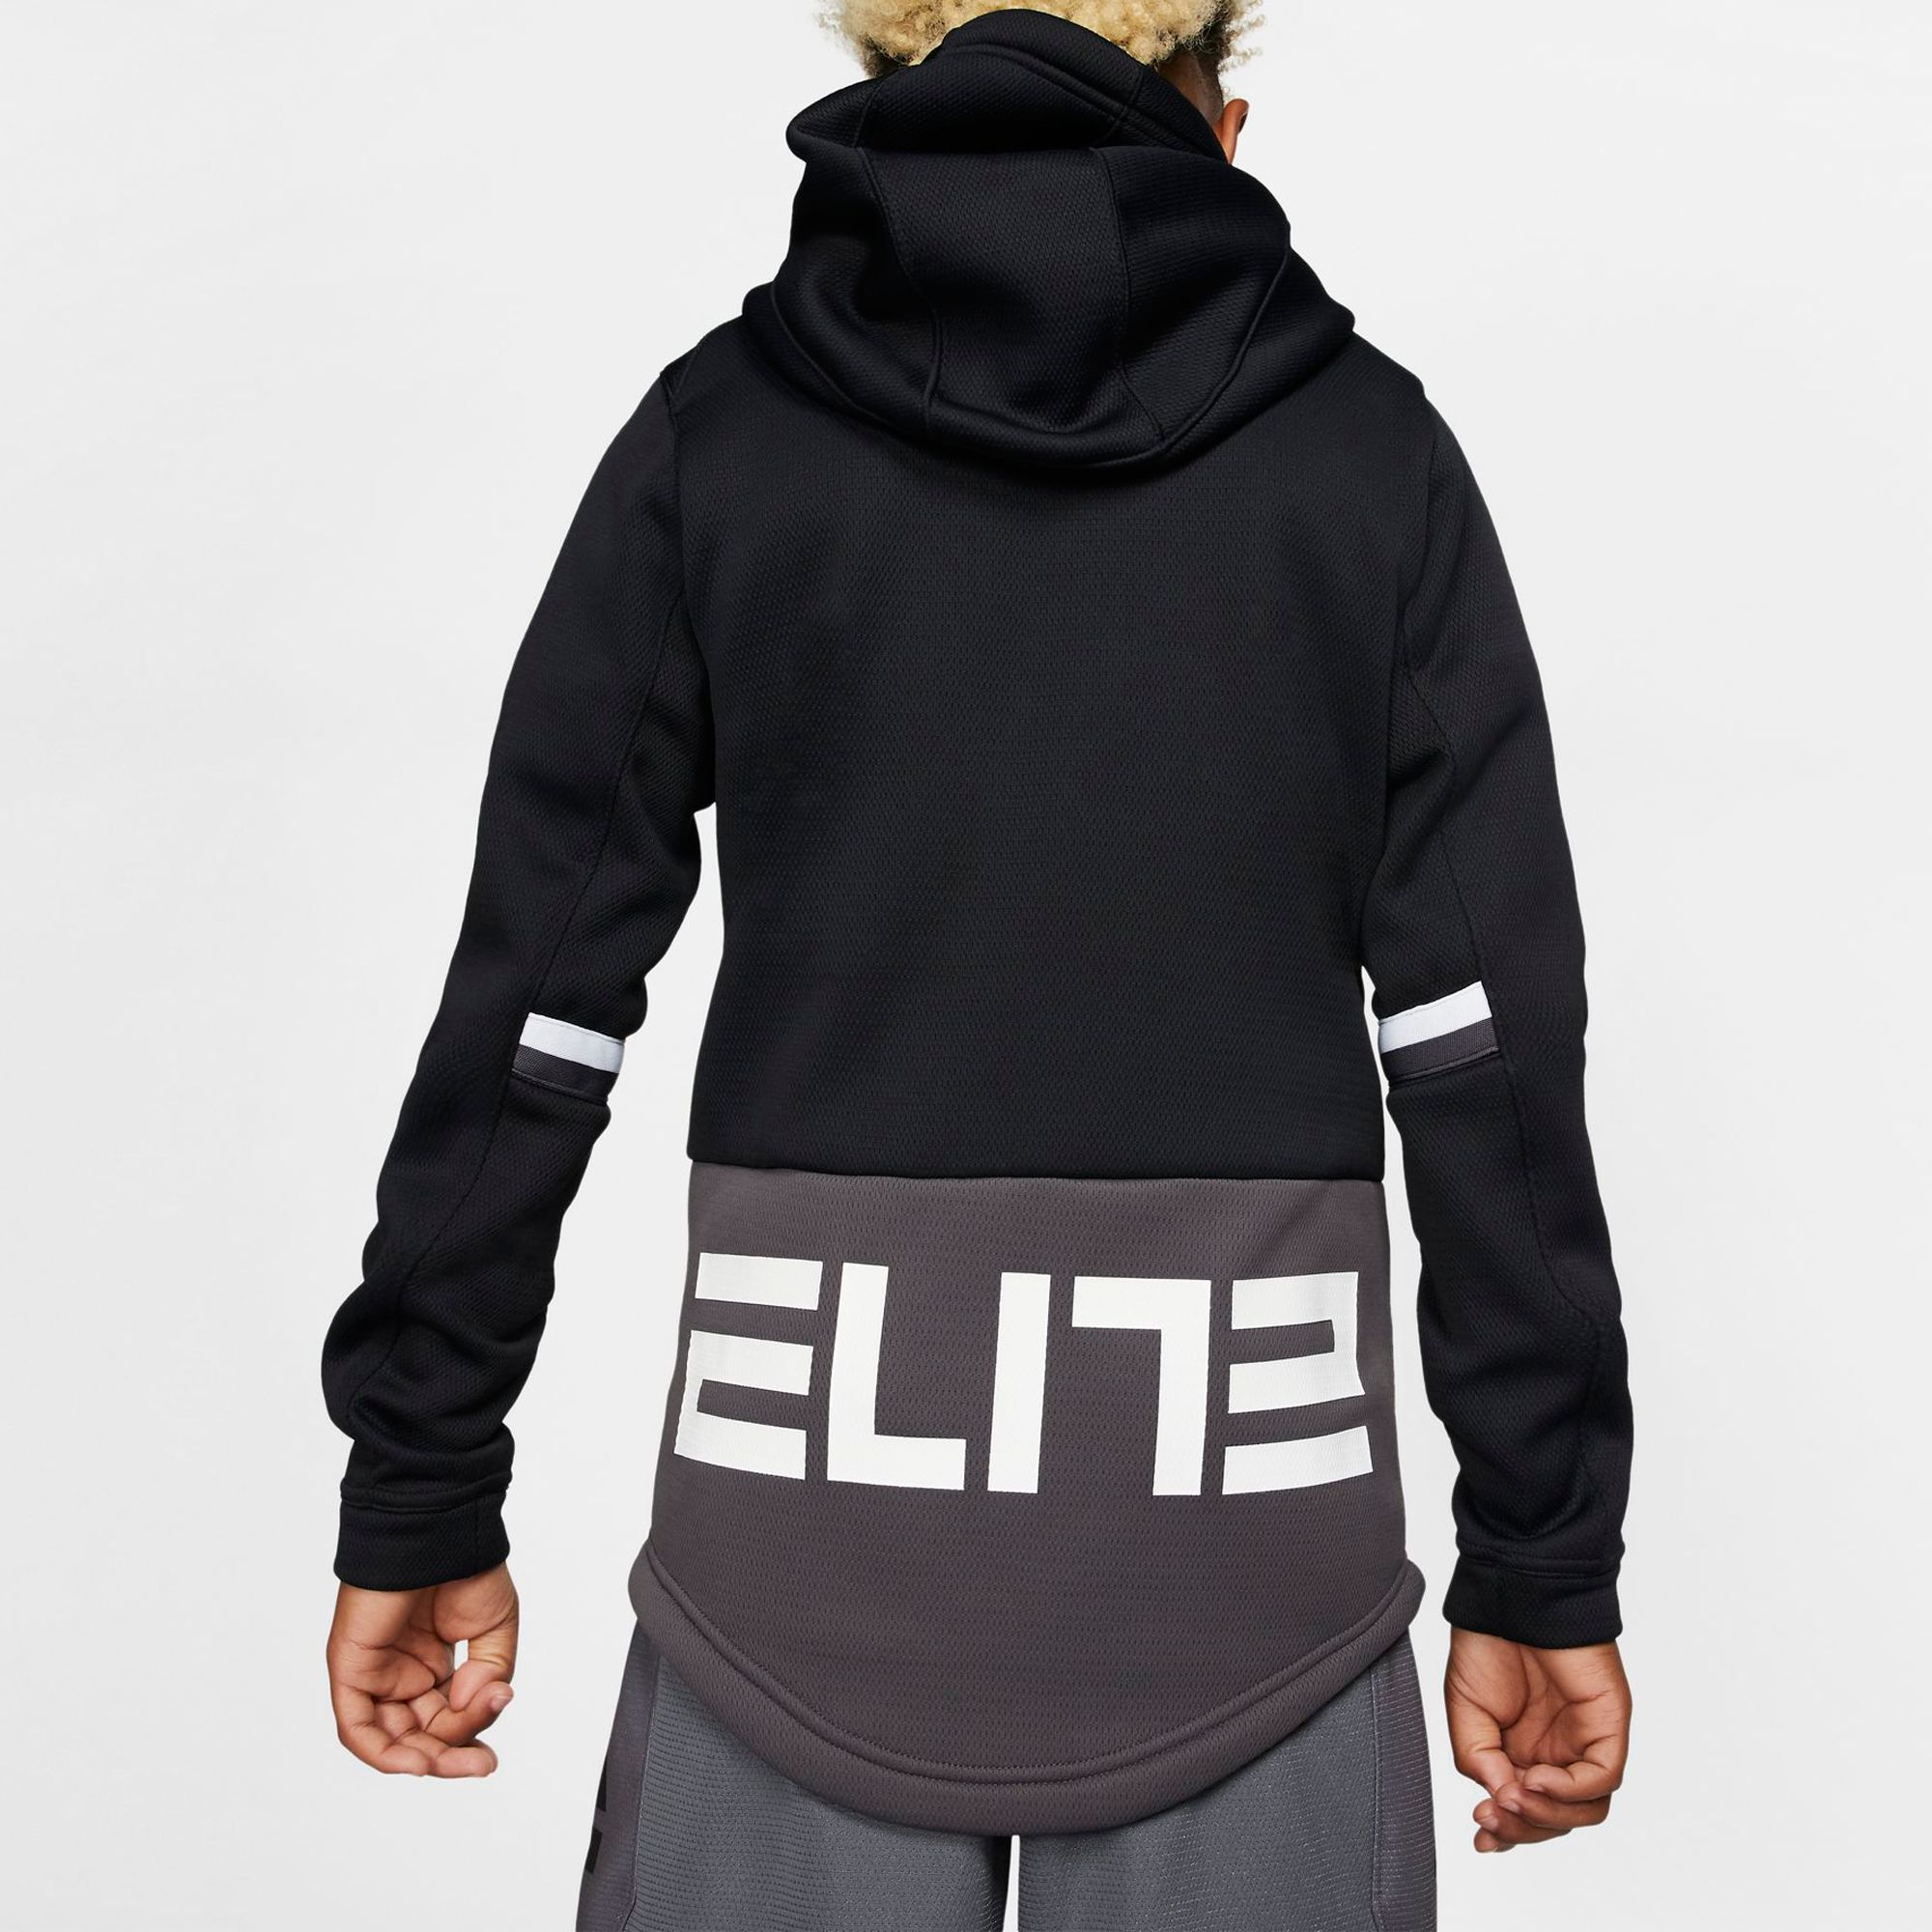 black nike elite jacket